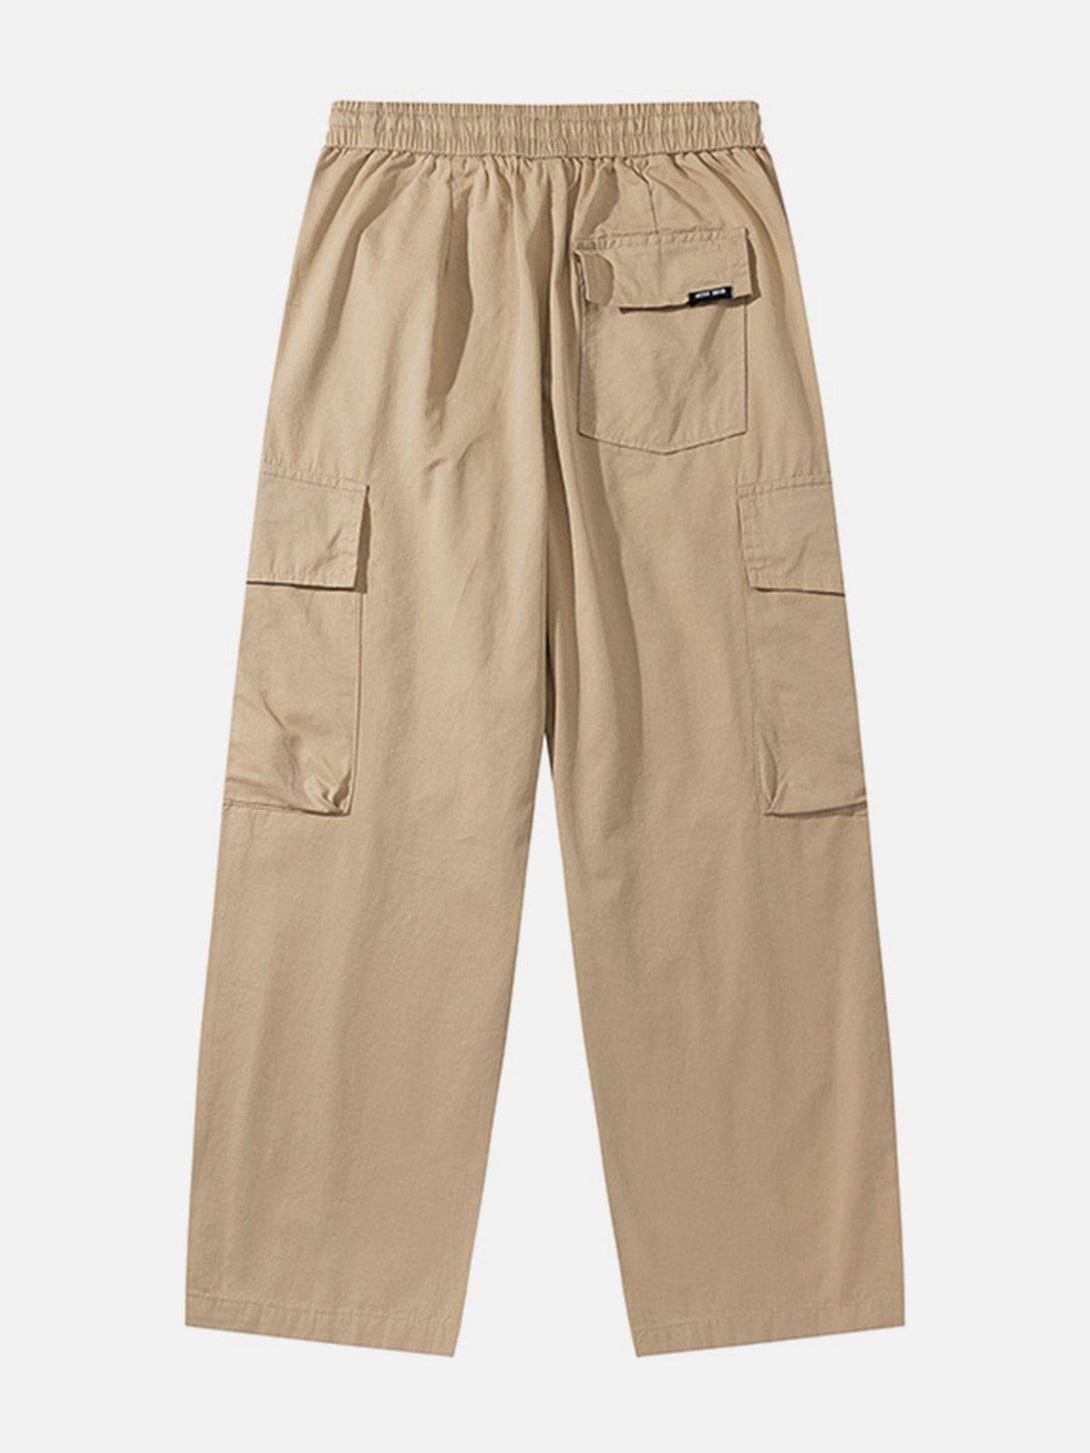 Majesda® - Multi-Pocket Straight Cargo Pants outfit ideas streetwear fashion